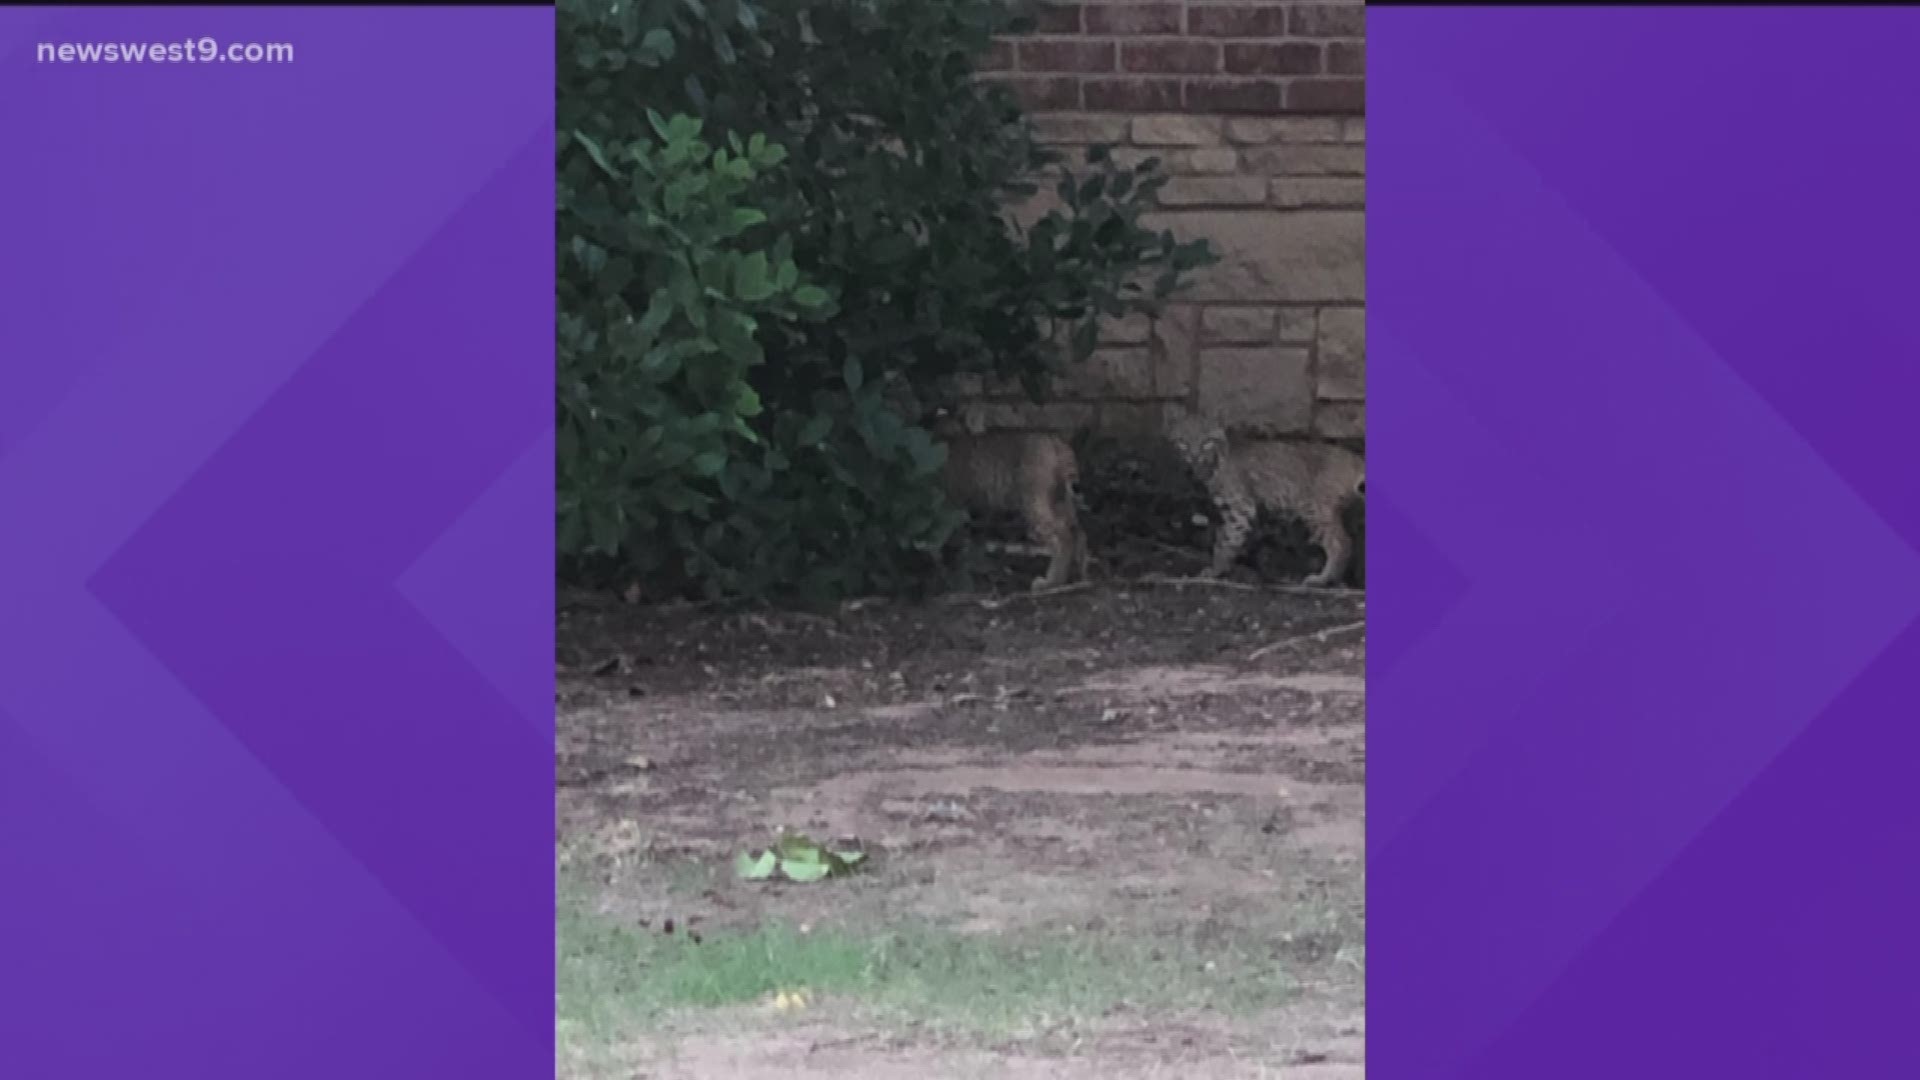 A bobcat family was spotted Wednesday in Grassland Estates near Nueva Vista Golf Course.